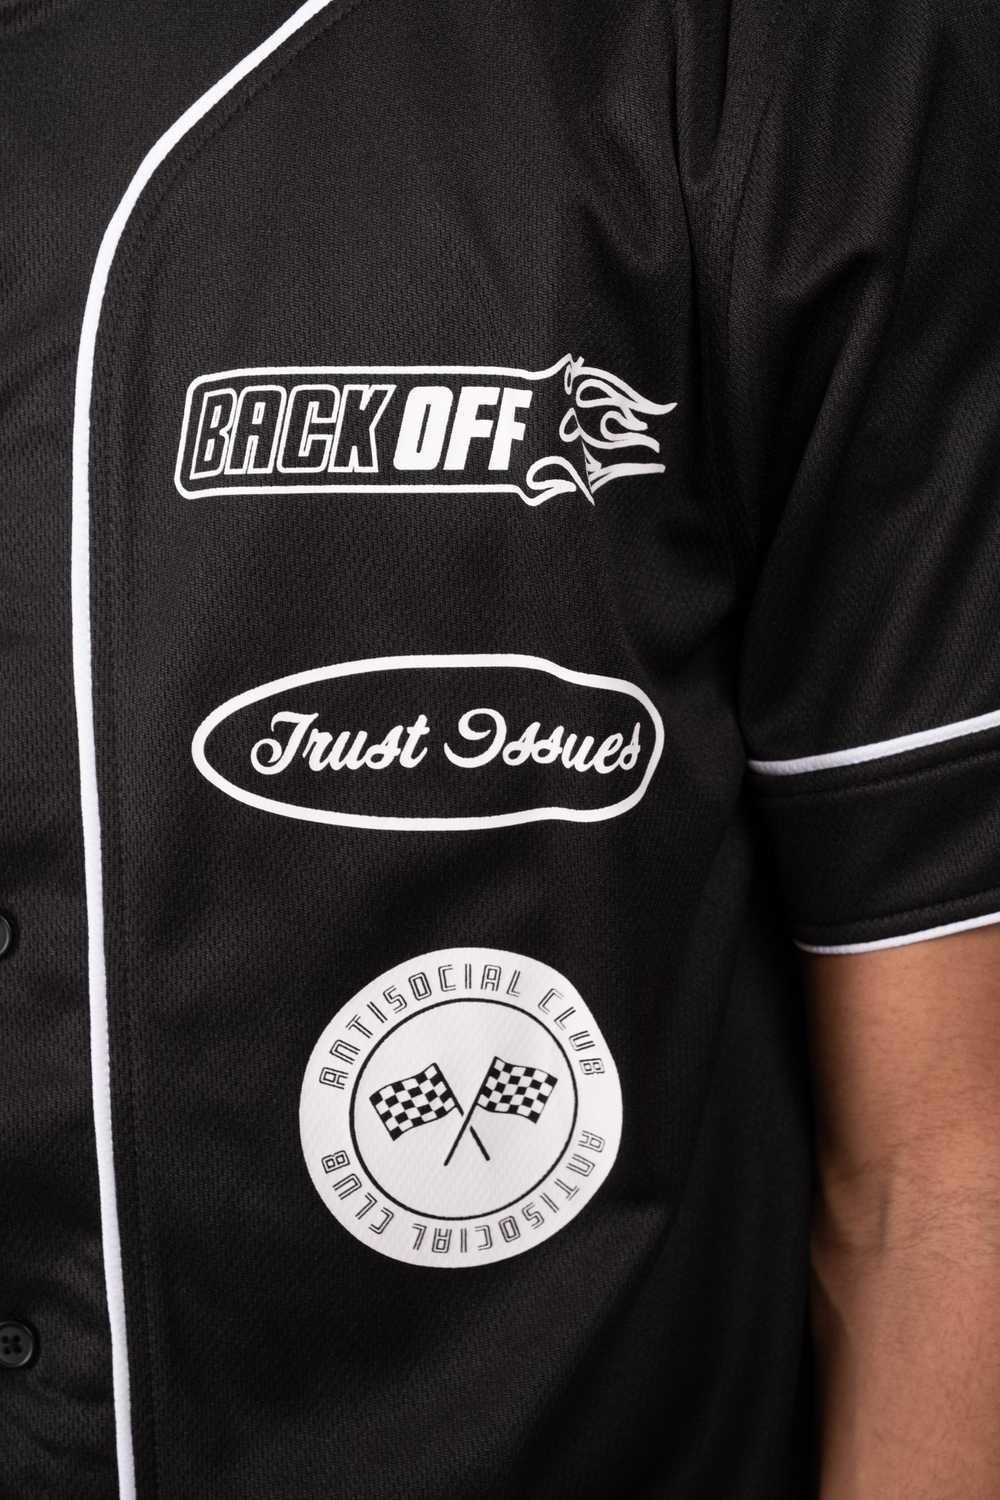 Brooklyn Cloth Back Off Mesh Baseball Jersey - image 4